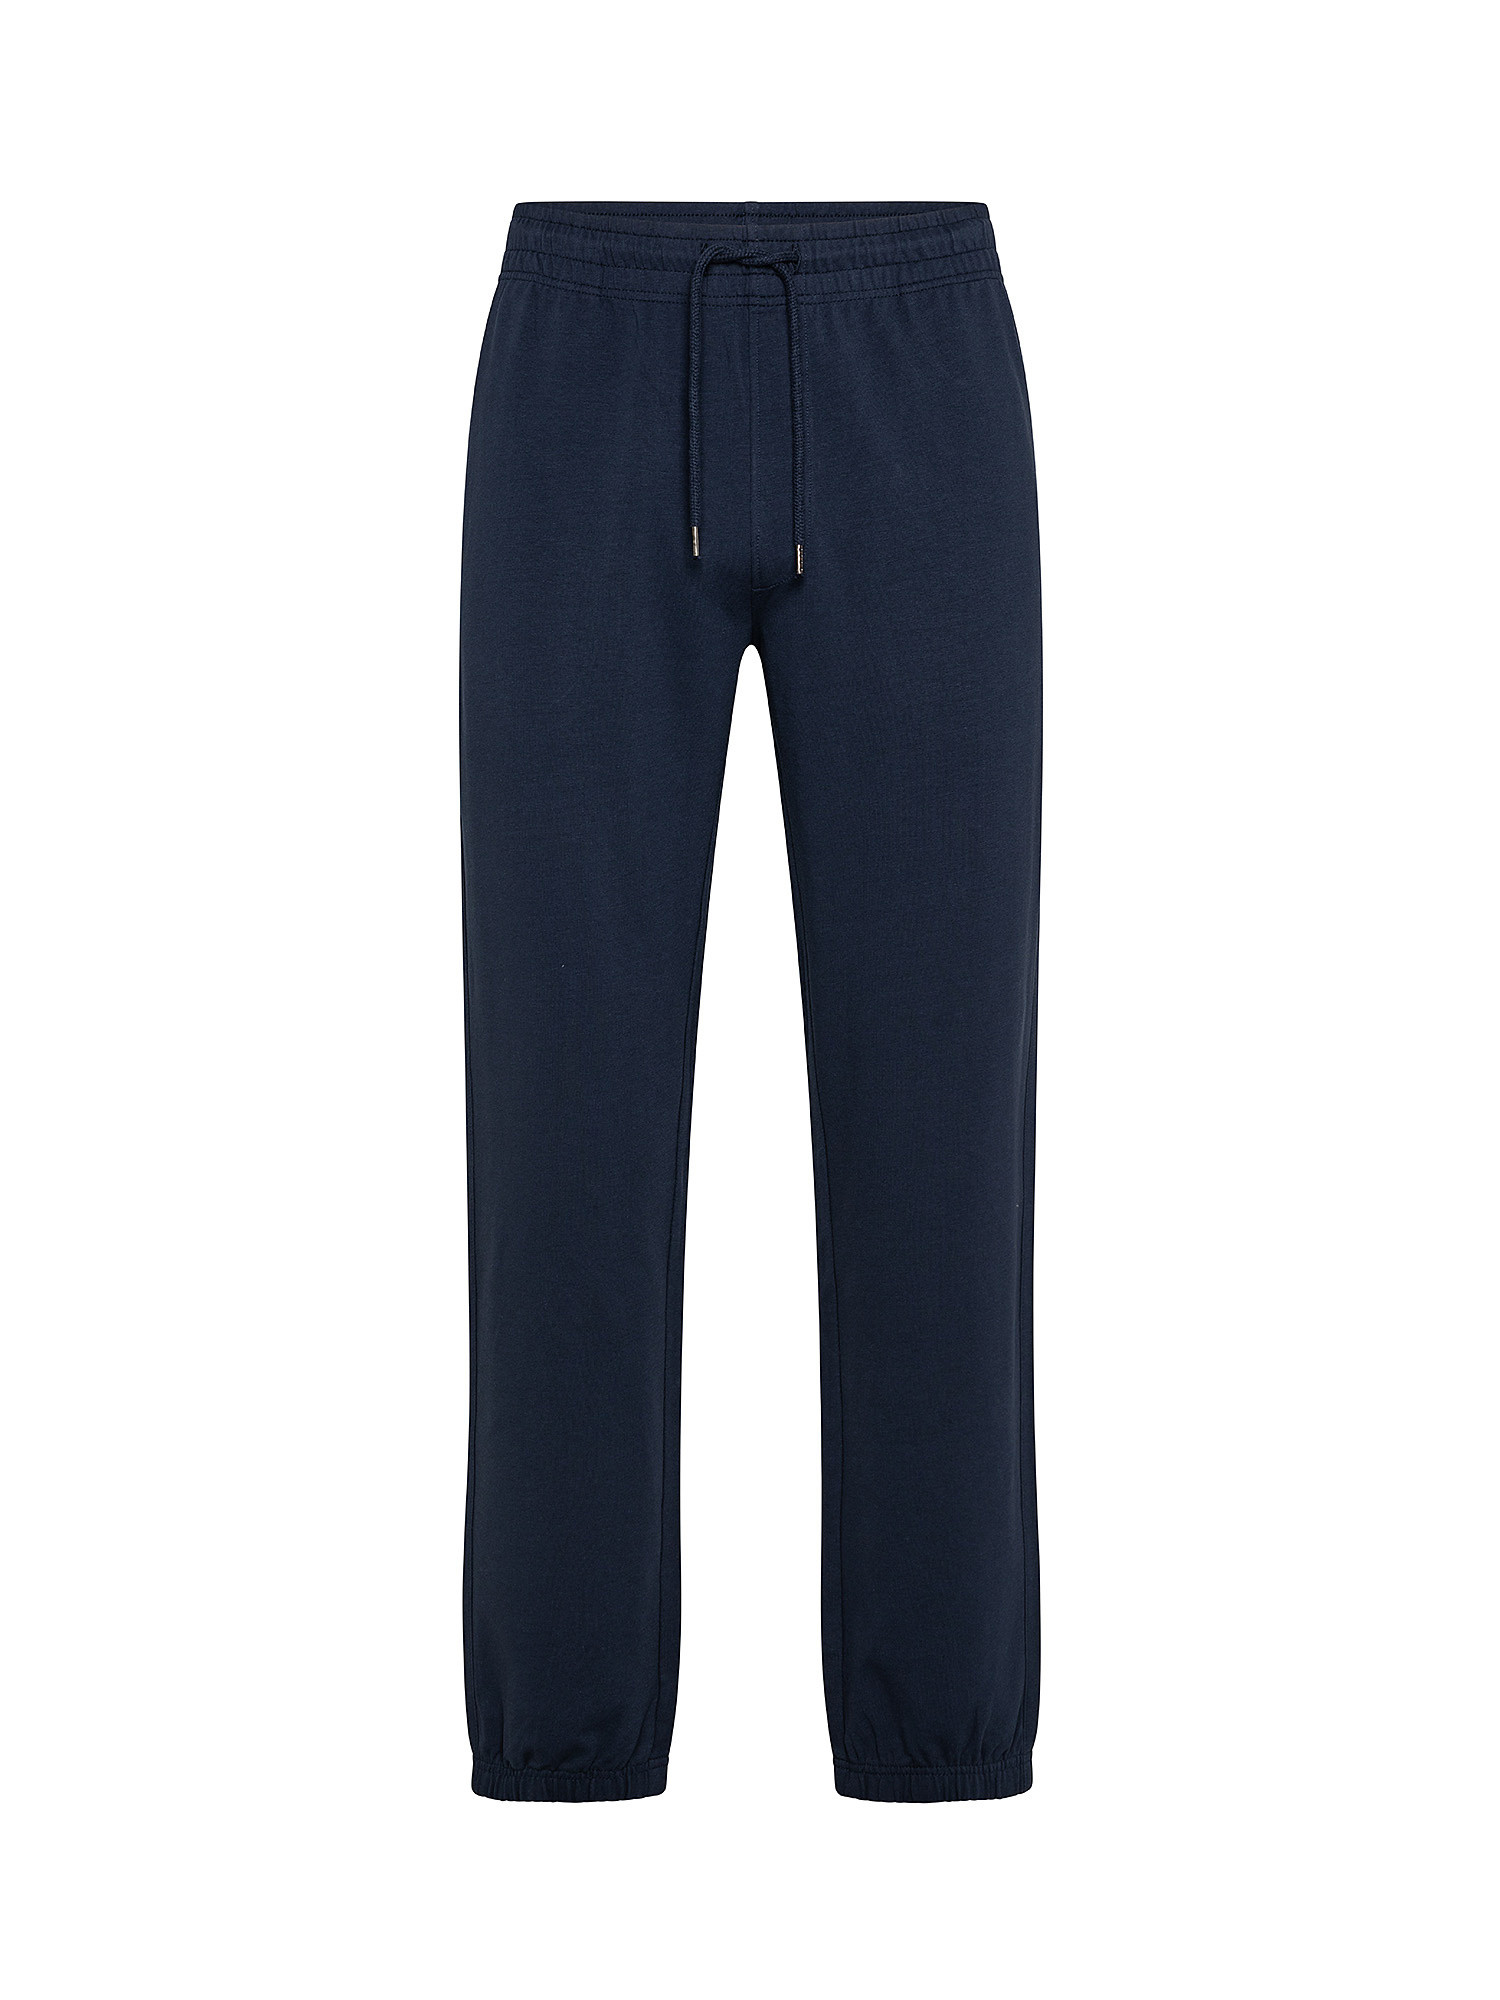 Pantalone in felpa, Blu, large image number 0